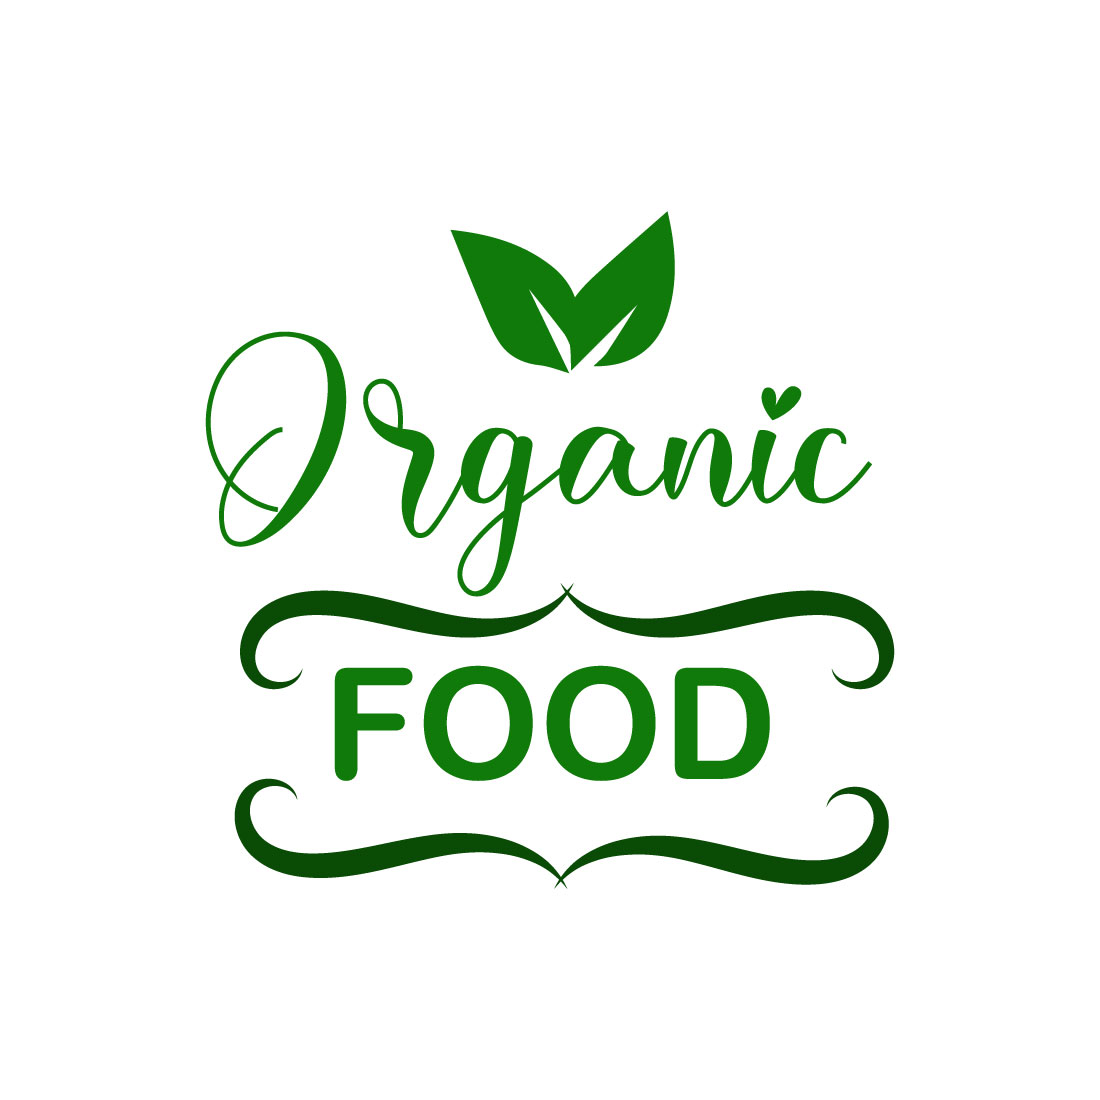 Free Organic food logo cover image.